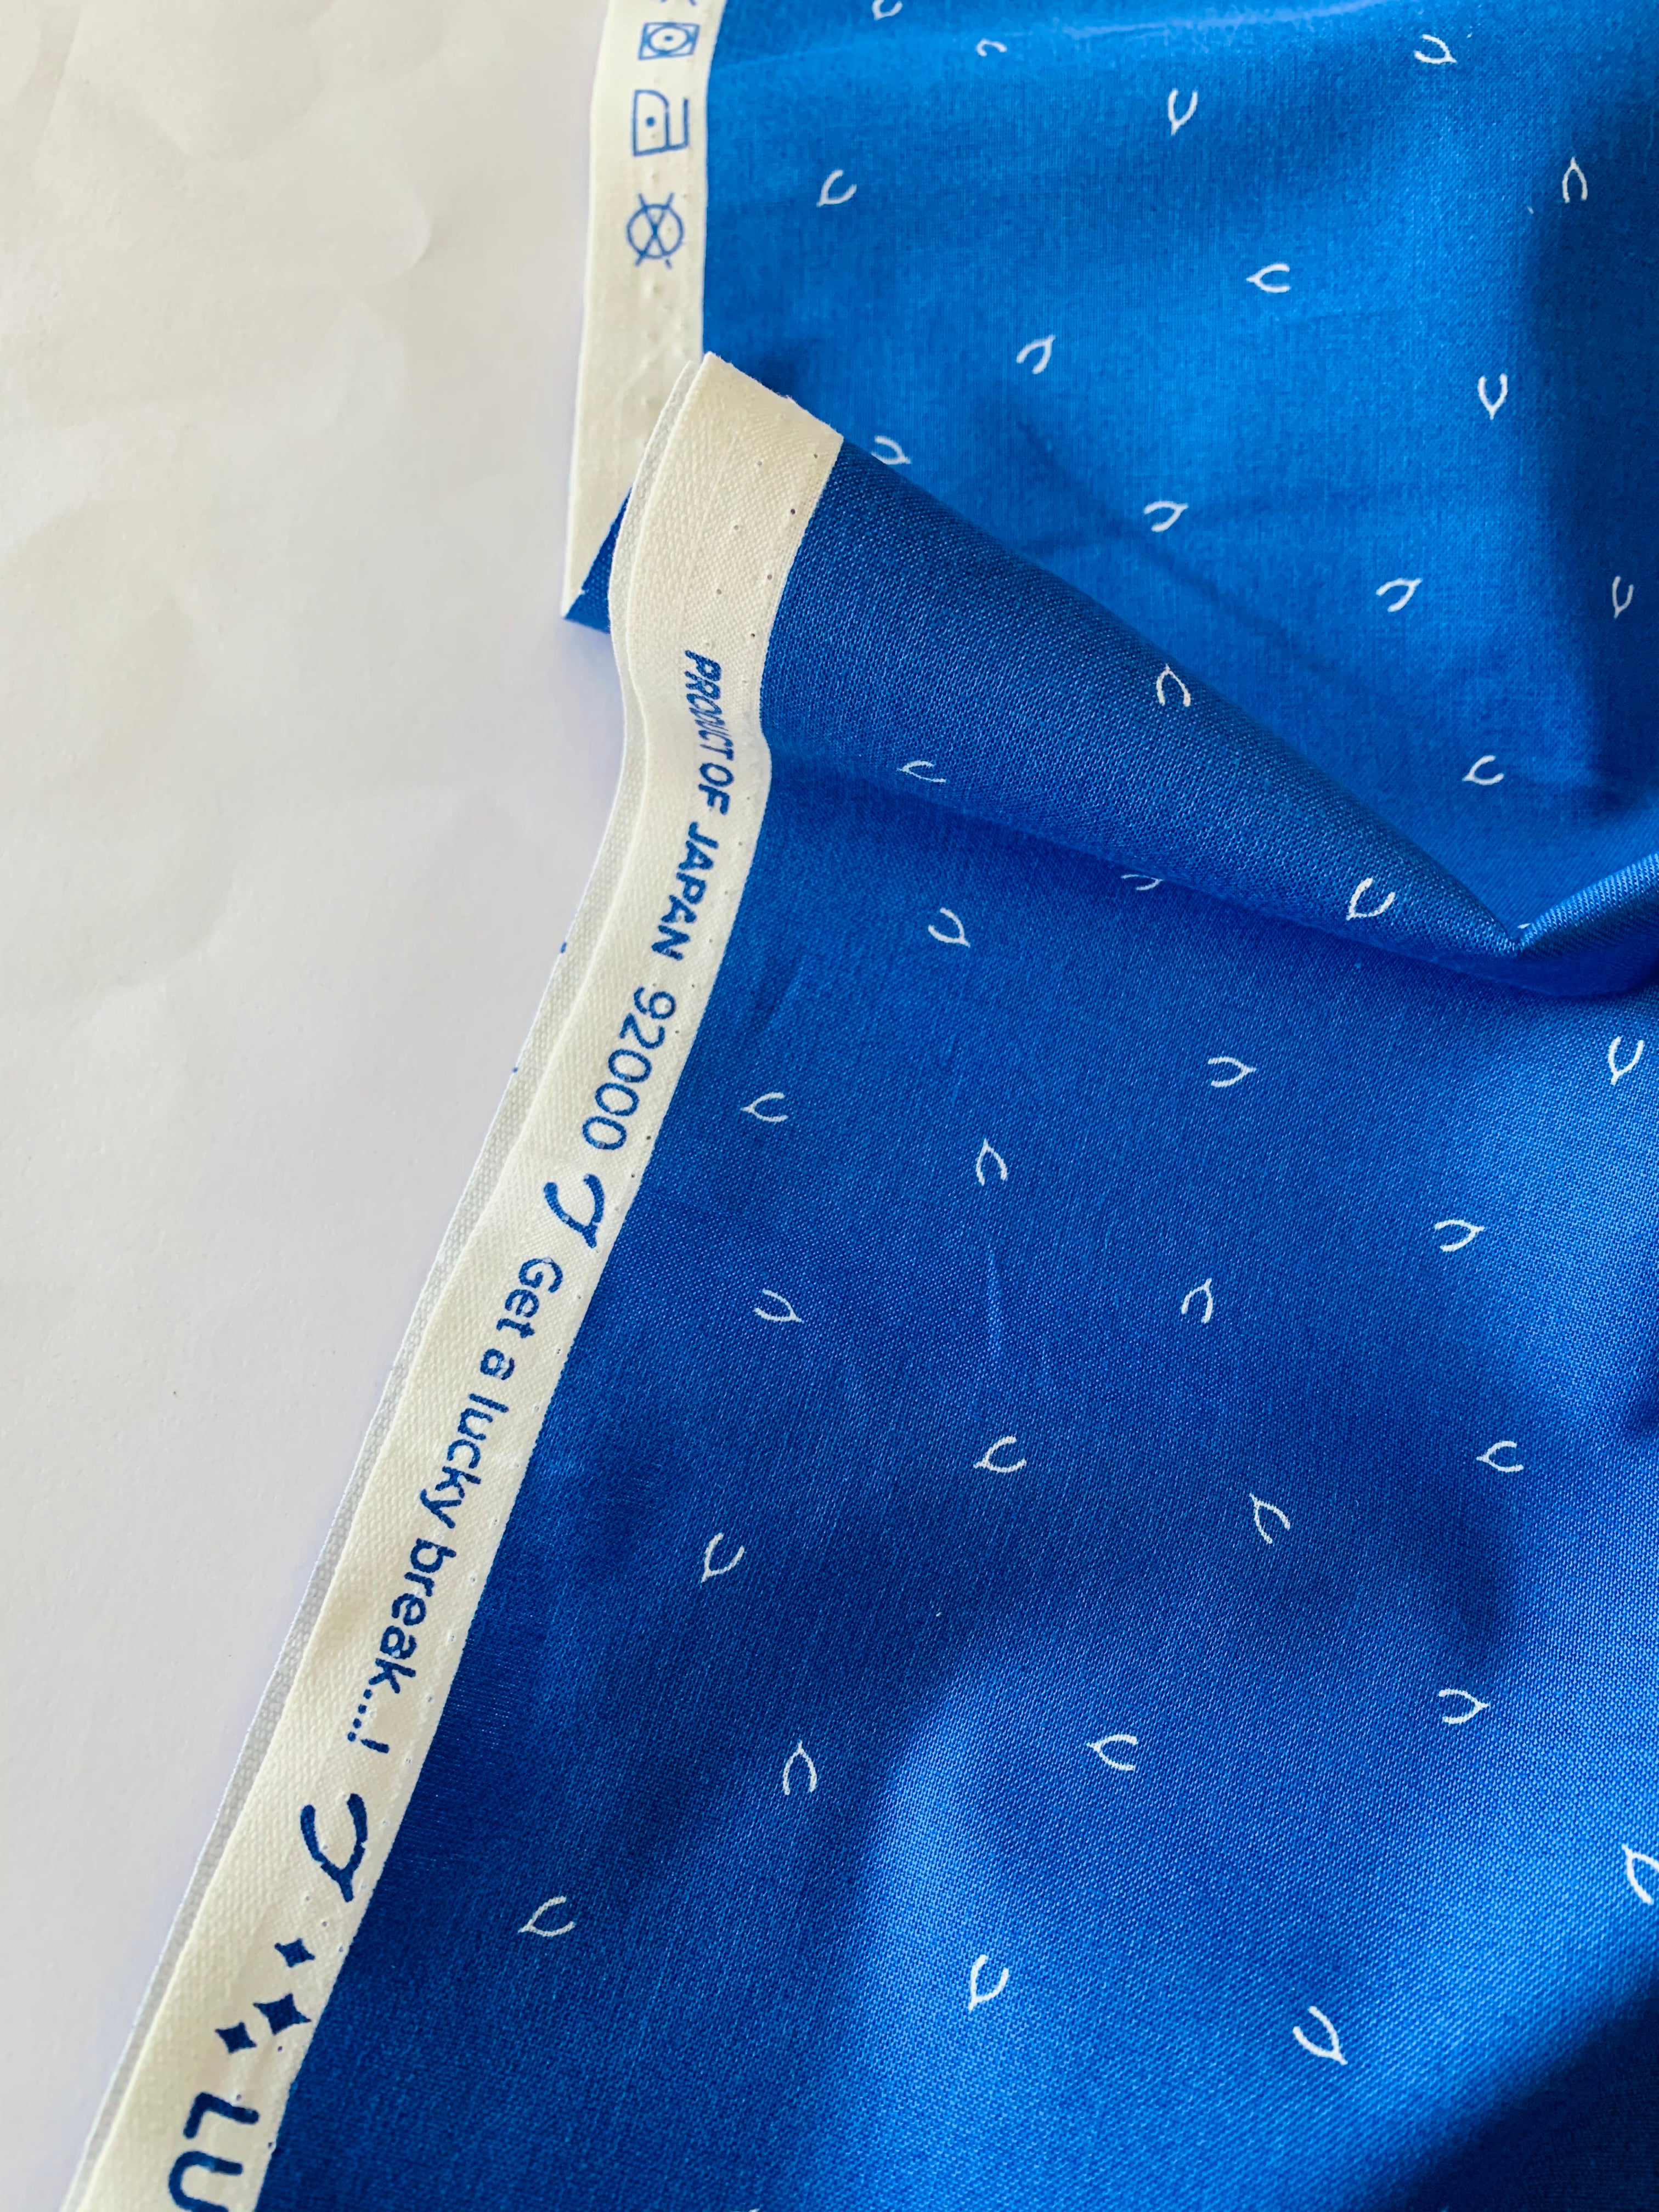 Figo Fabrics Lucky Charms Wishbone in Cobalt